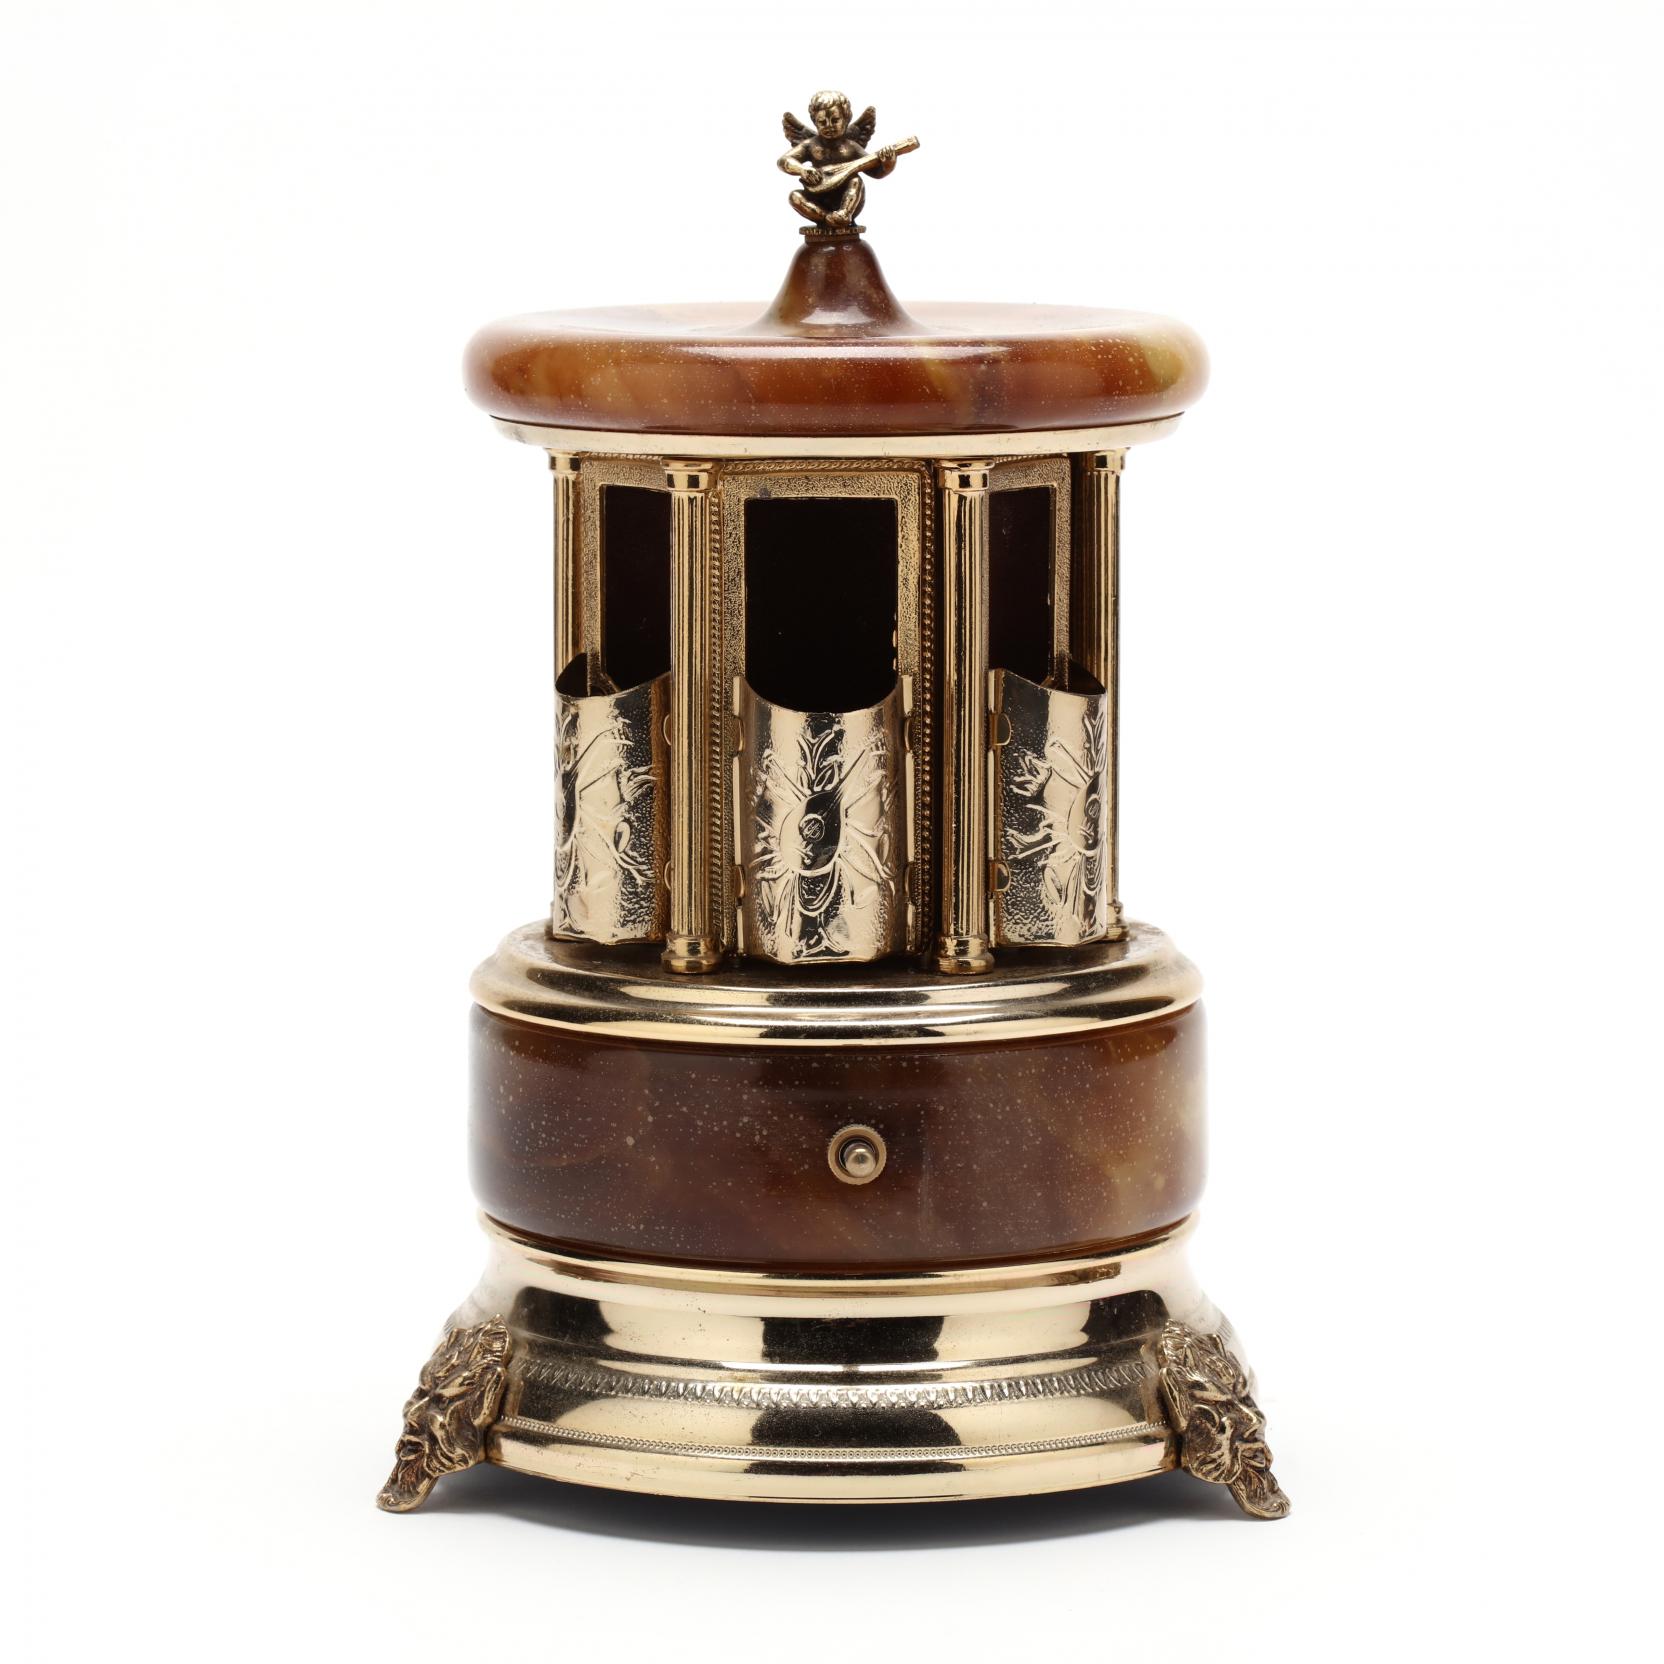 ANTIQUE CAROUSEL LIPSTICK, CIGARETTE MUSIC BOX - antiques - by owner -  collectibles sale - craigslist